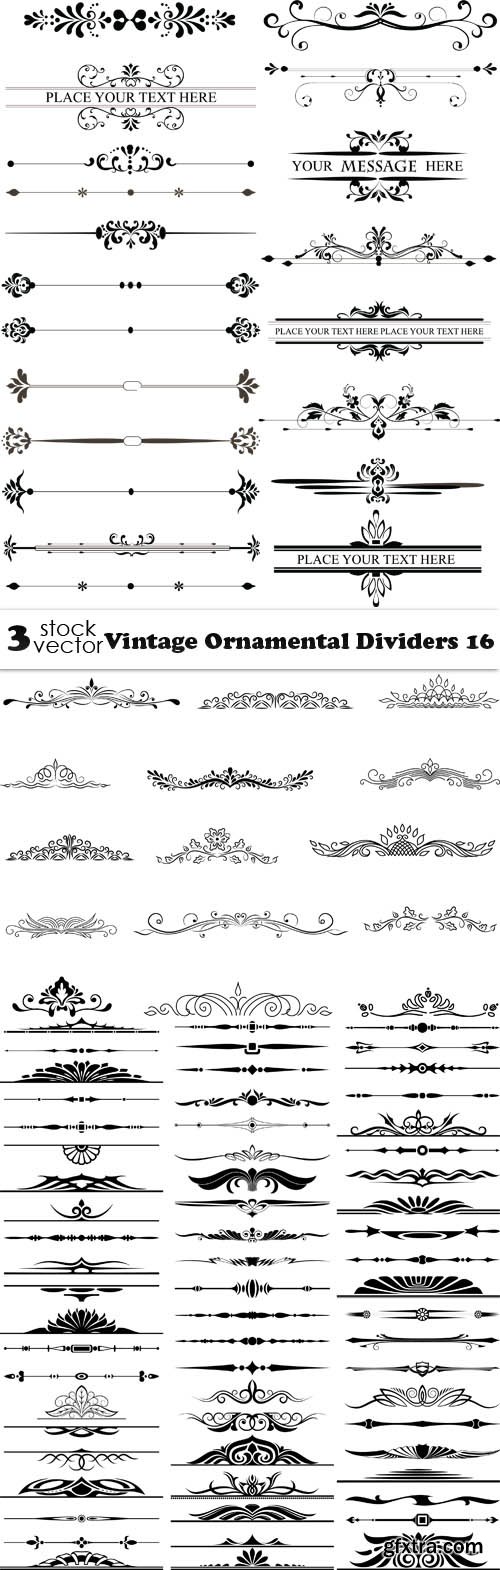 Vectors - Vintage Ornamental Dividers 16